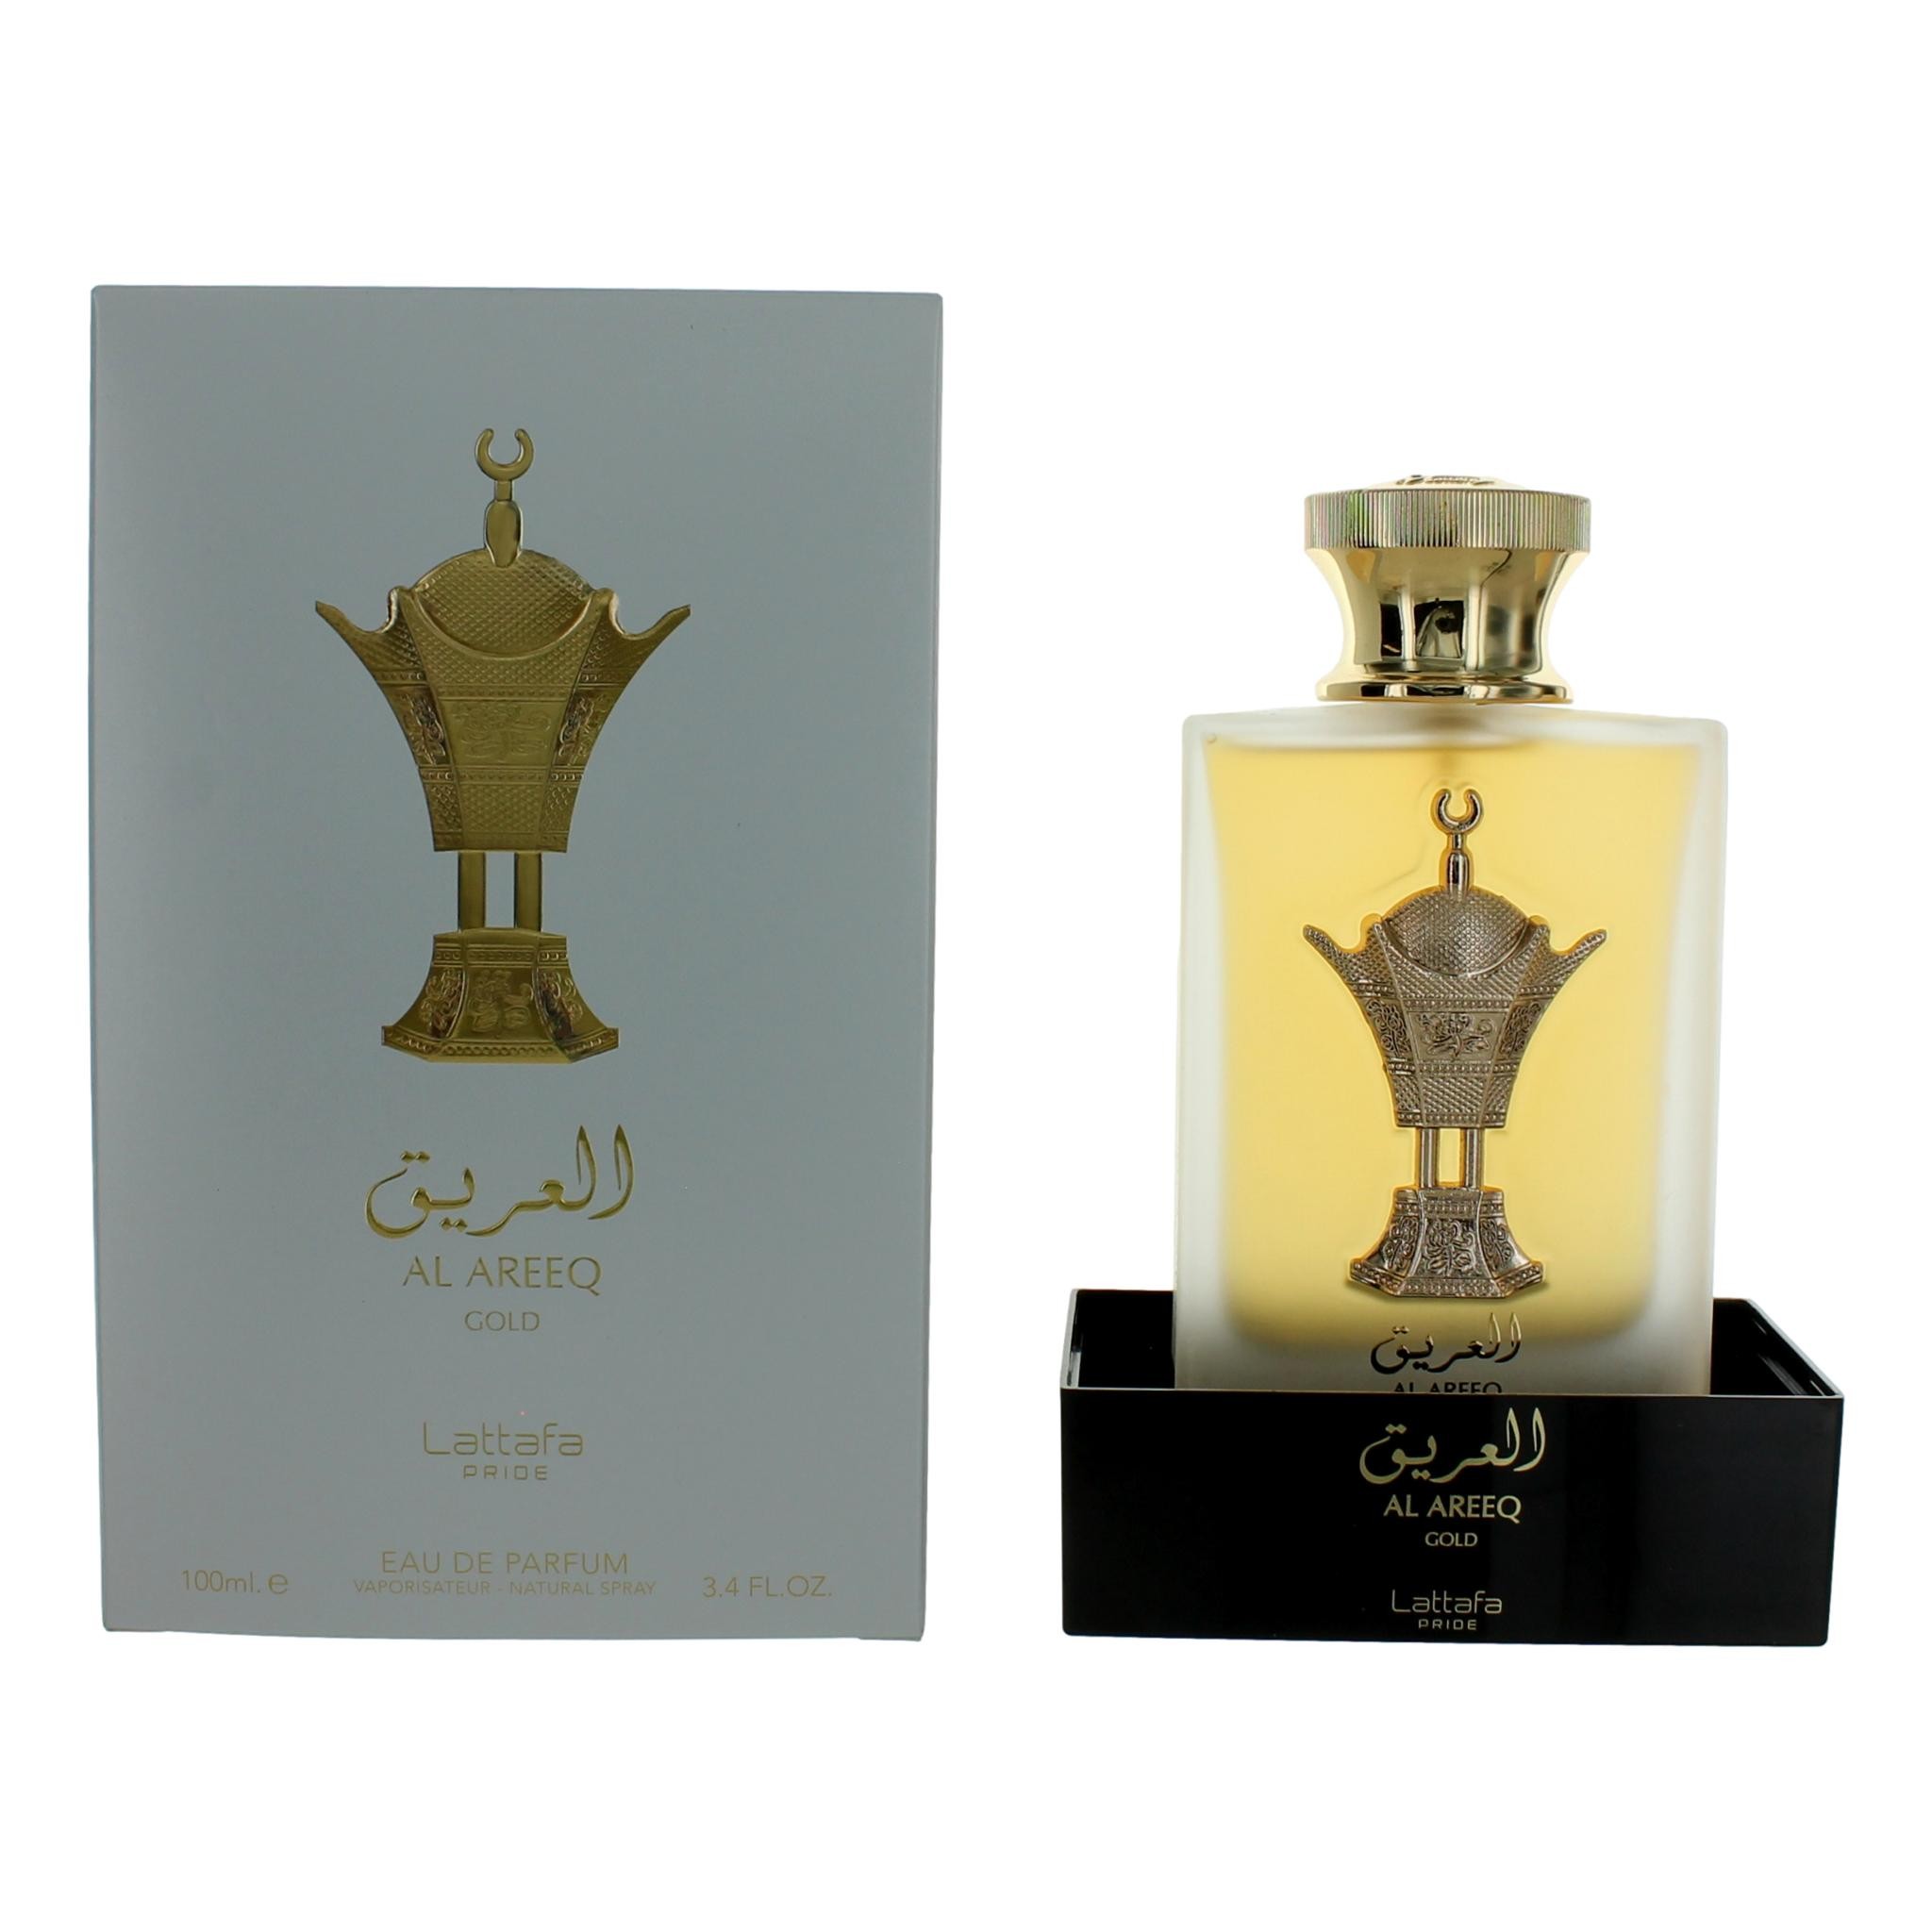 Al Areeq Gold by Lattafa 3.4 oz Eau De Parfum Spray for Unisex